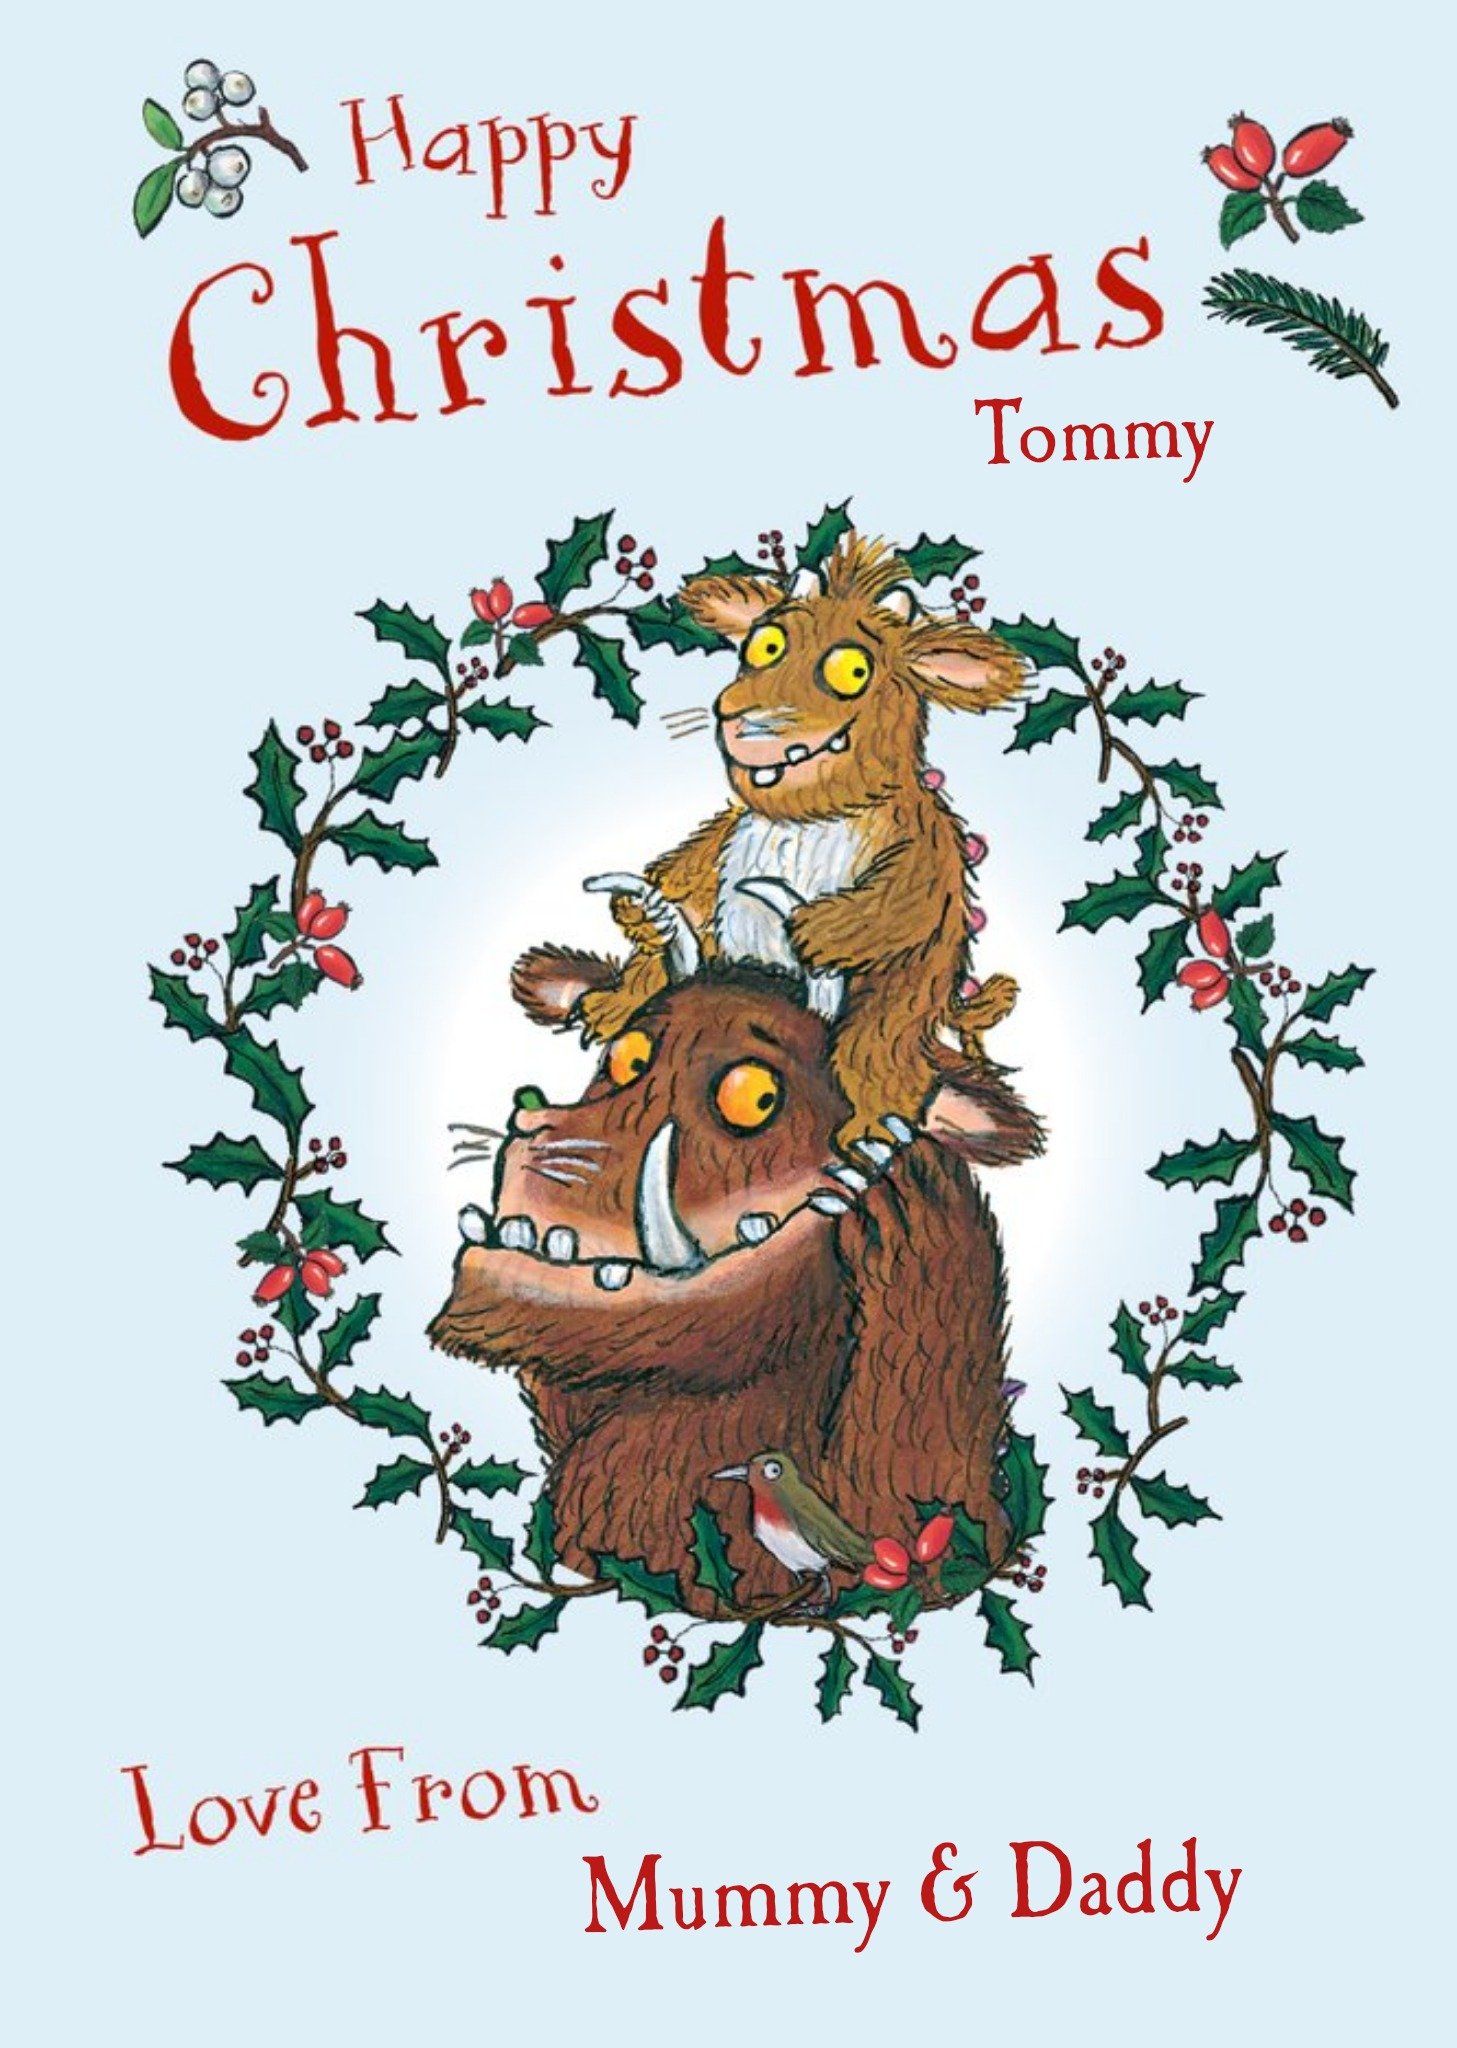 The Gruffalo Illustrated Wreath Happy Christmas Card, Large